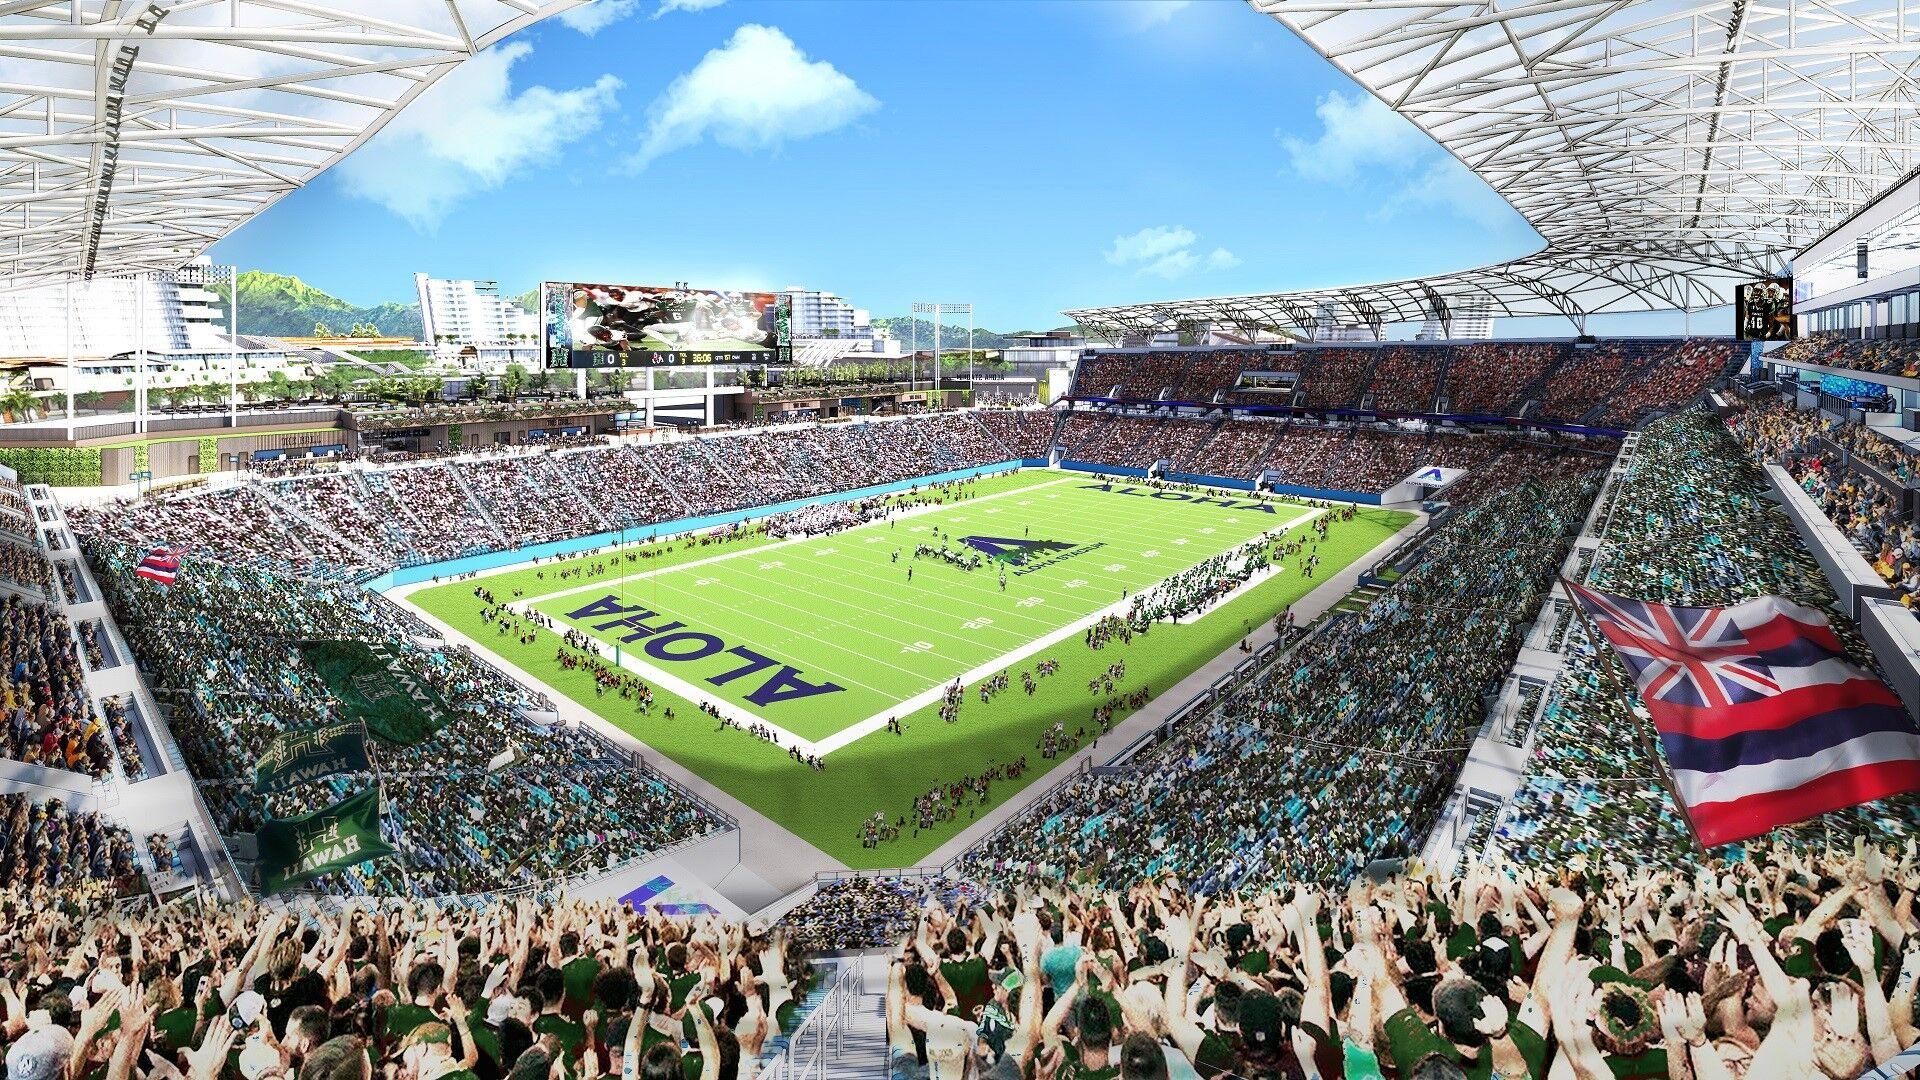 Construction on new Aloha Stadium planned for early 2023 | Local | kitv.com